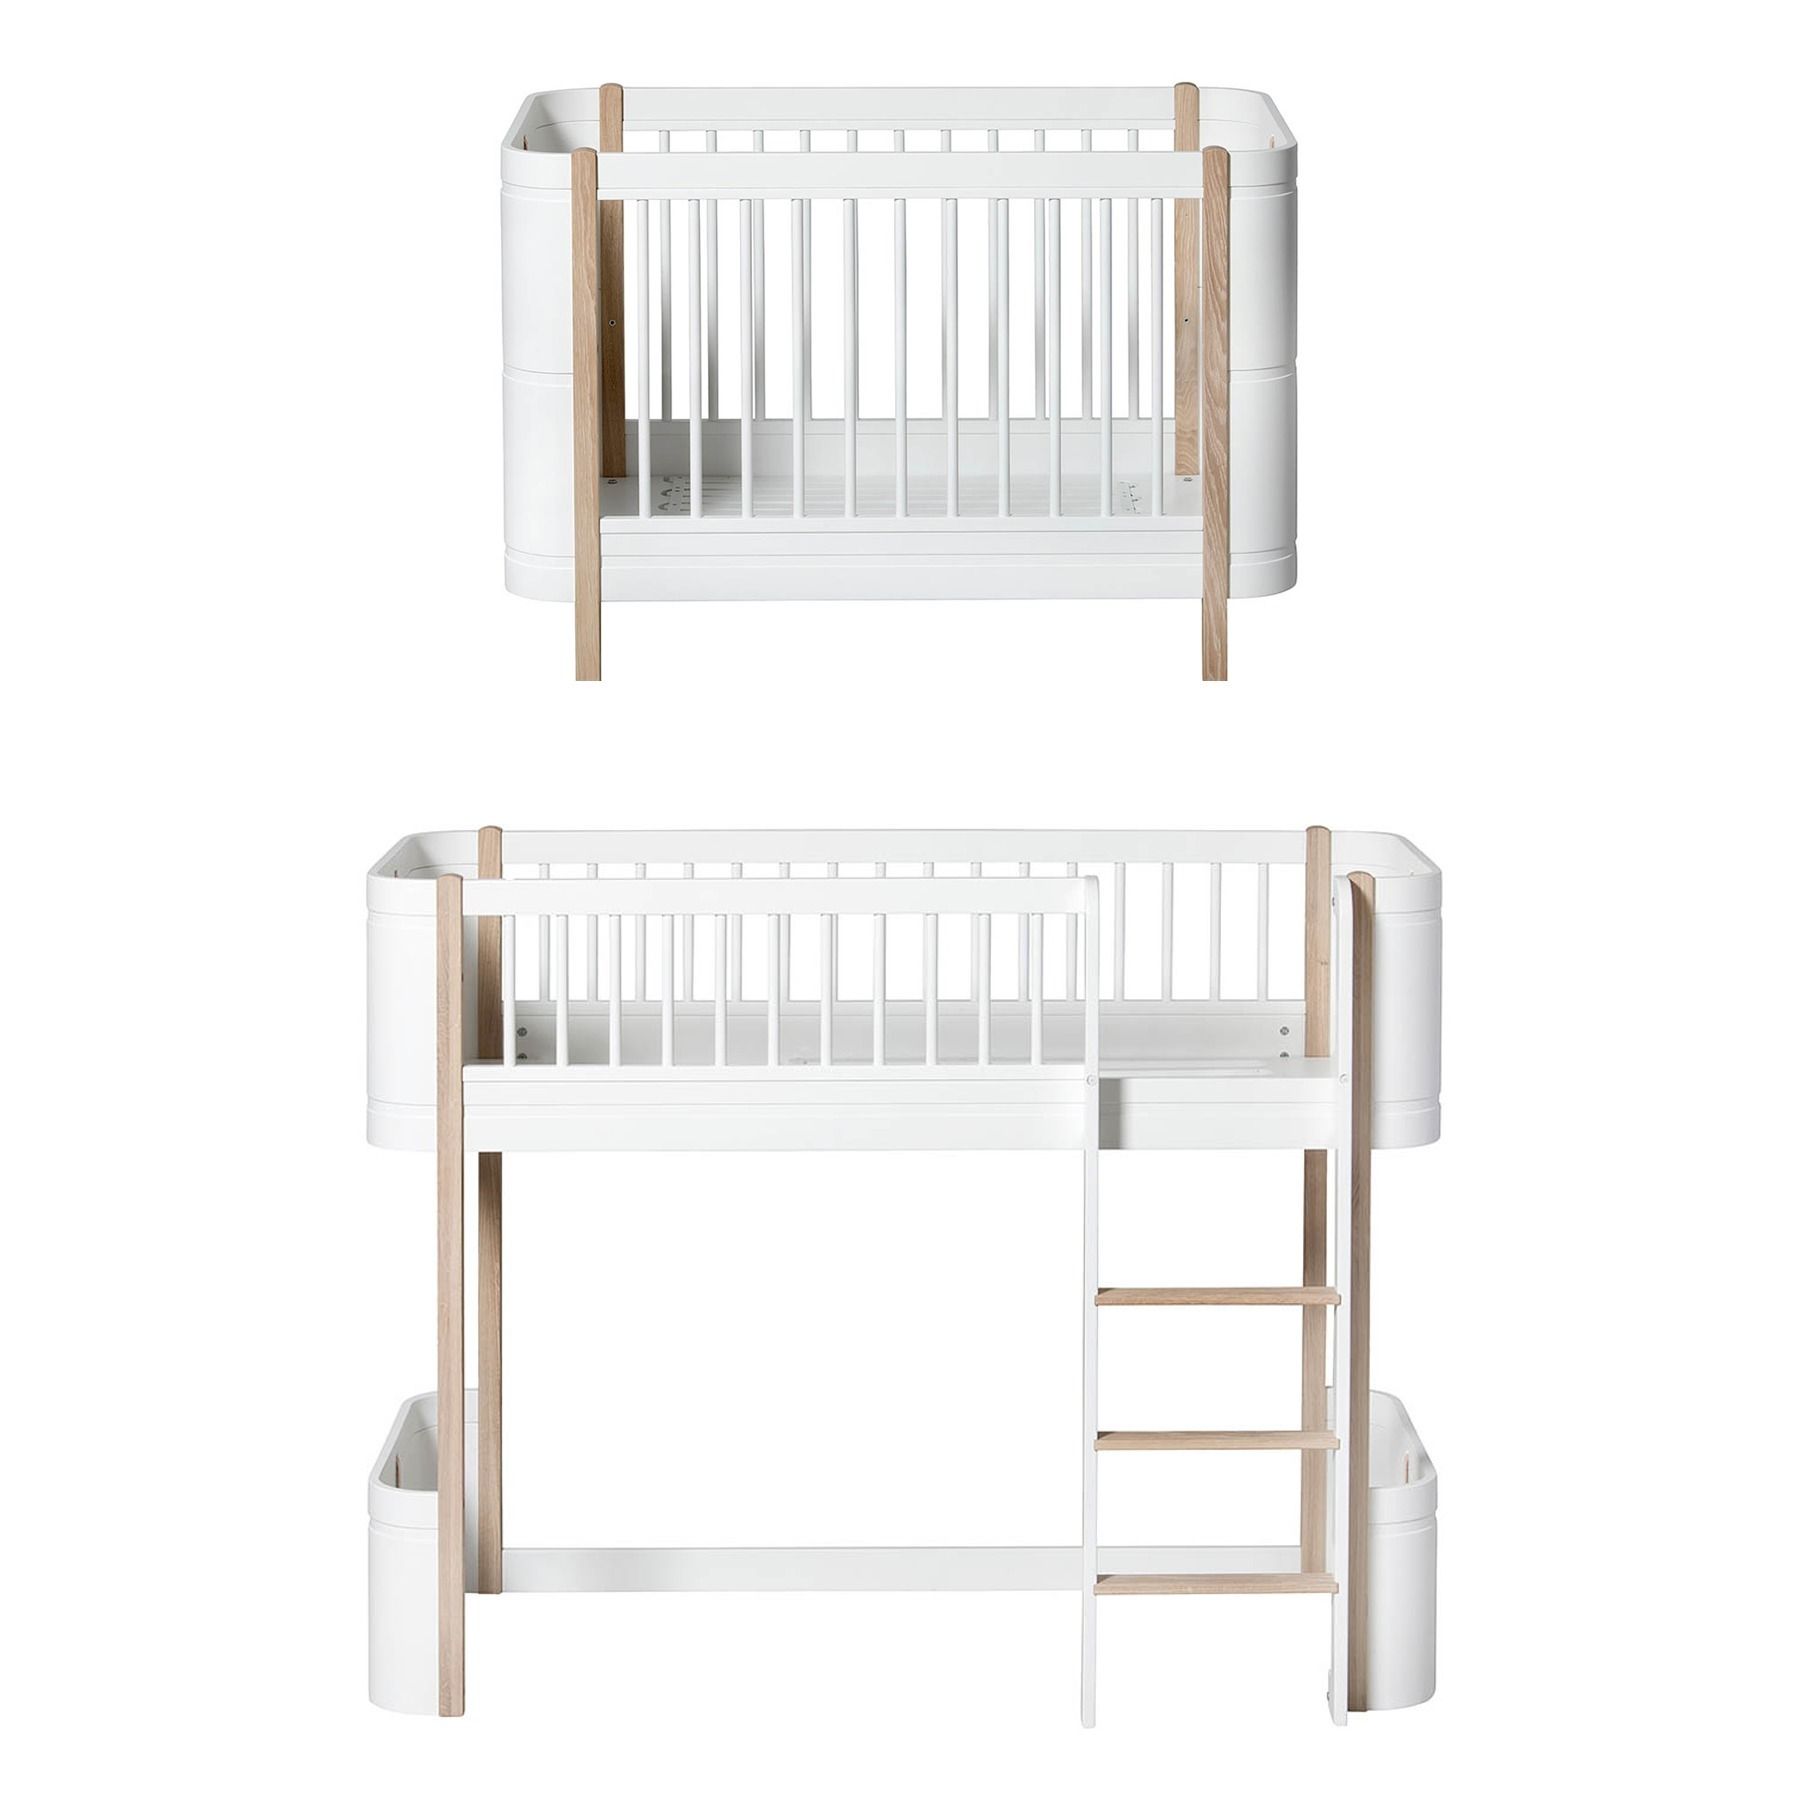 Oliver Furniture - Kit de conversion pour lit Mini+ - Chêne